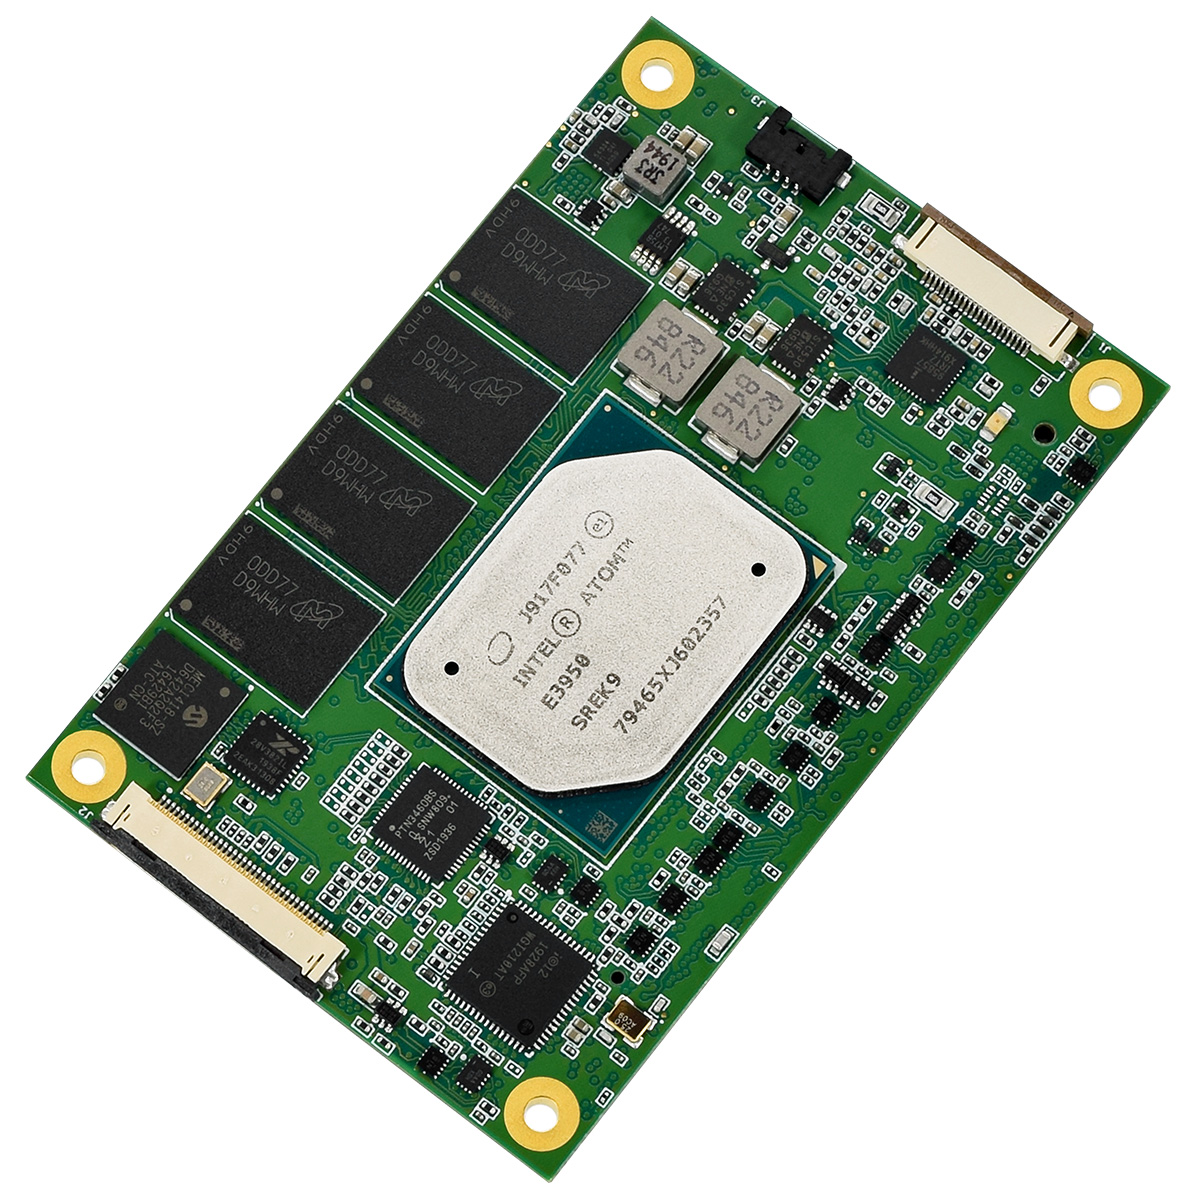 COM Express® Type 10 Mini Module with Intel® Atom™ E3900 Processor